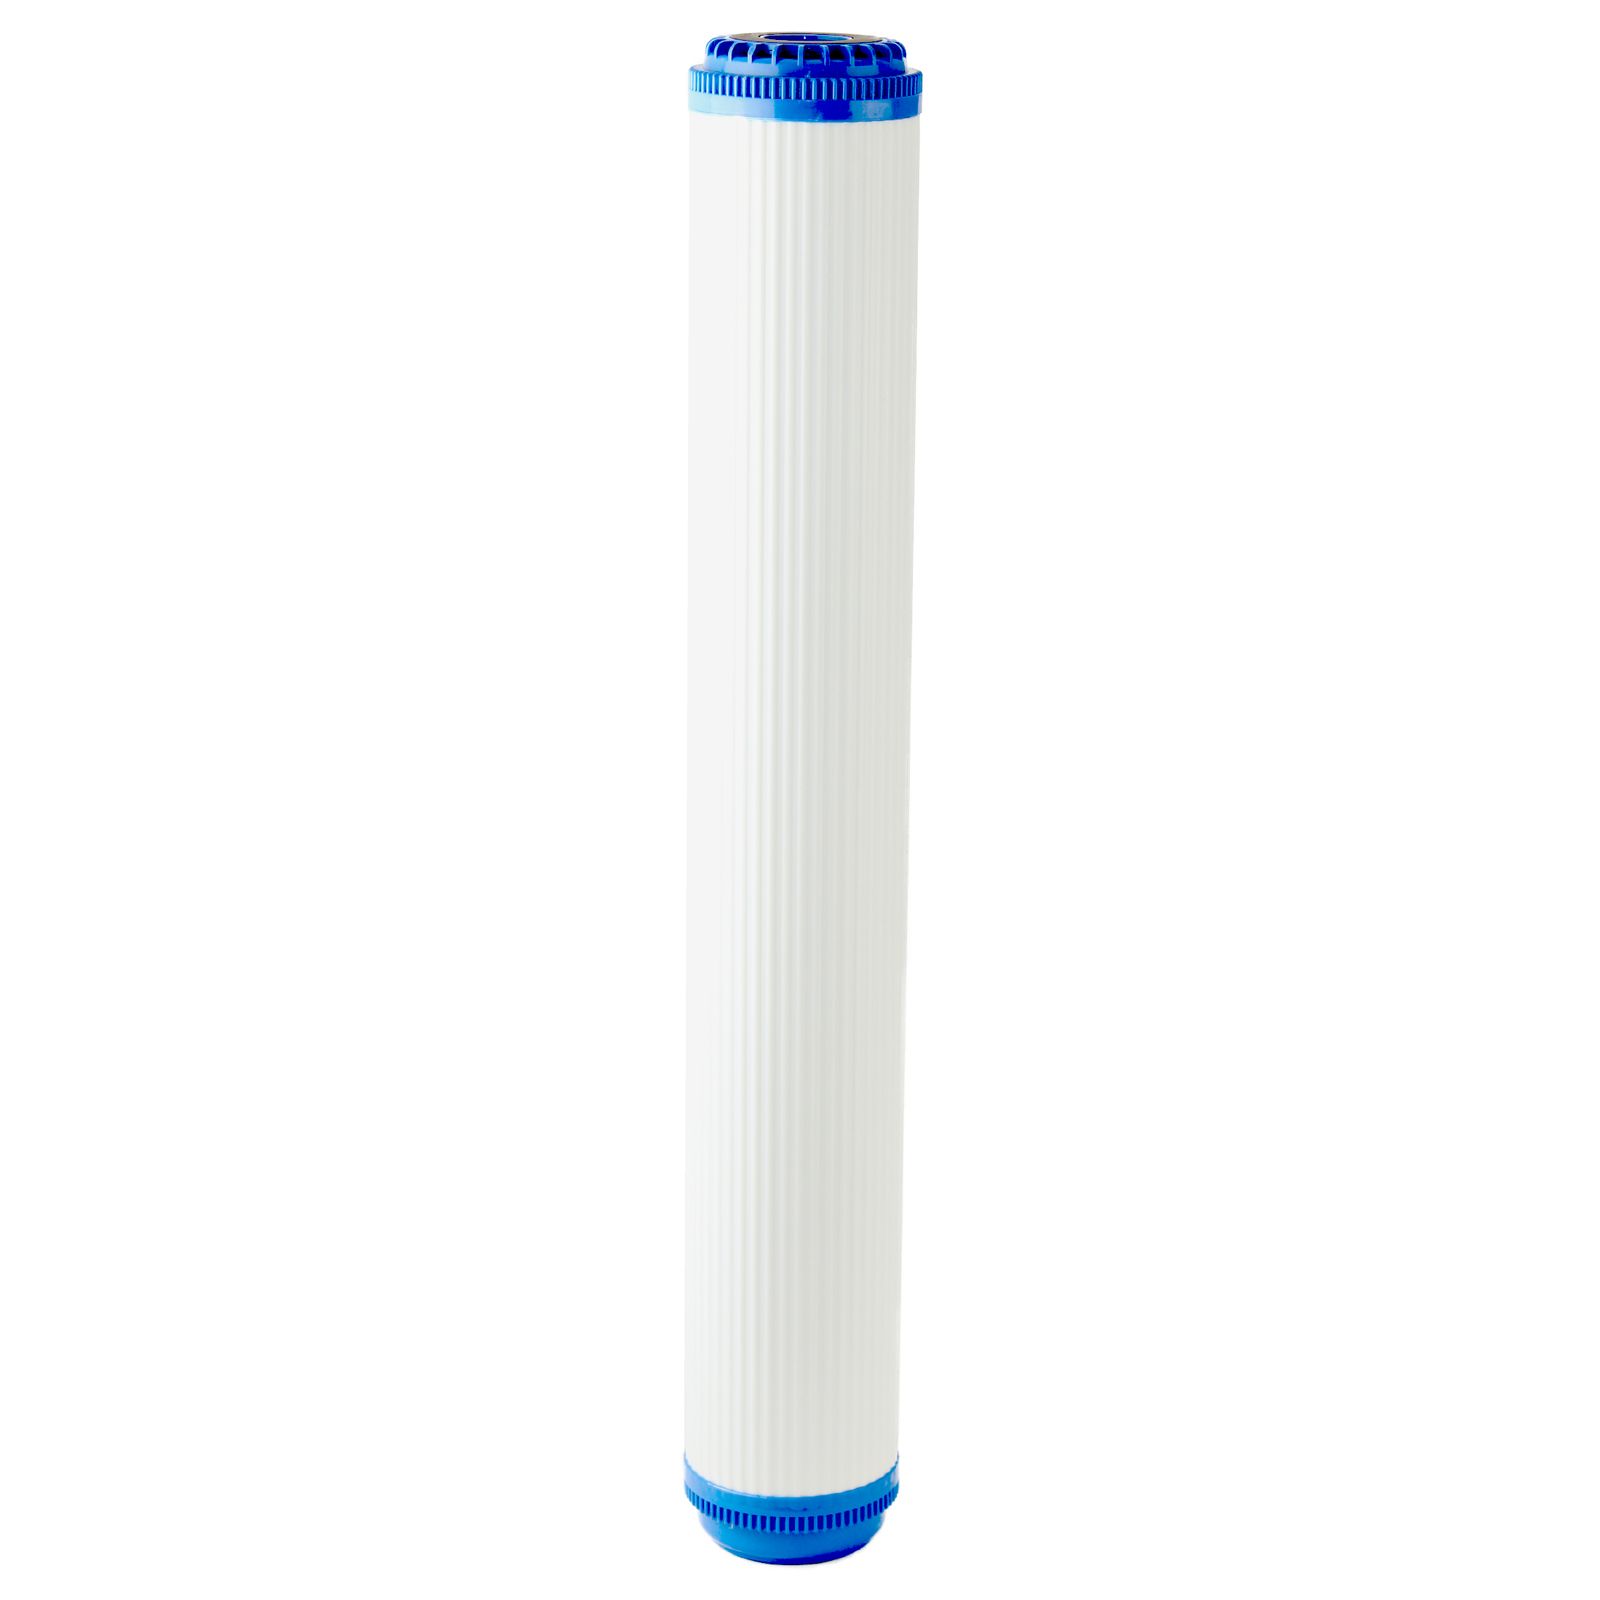 Uniflow 20" x 2.5" GAC Carbon Water Filter - 5 Micron